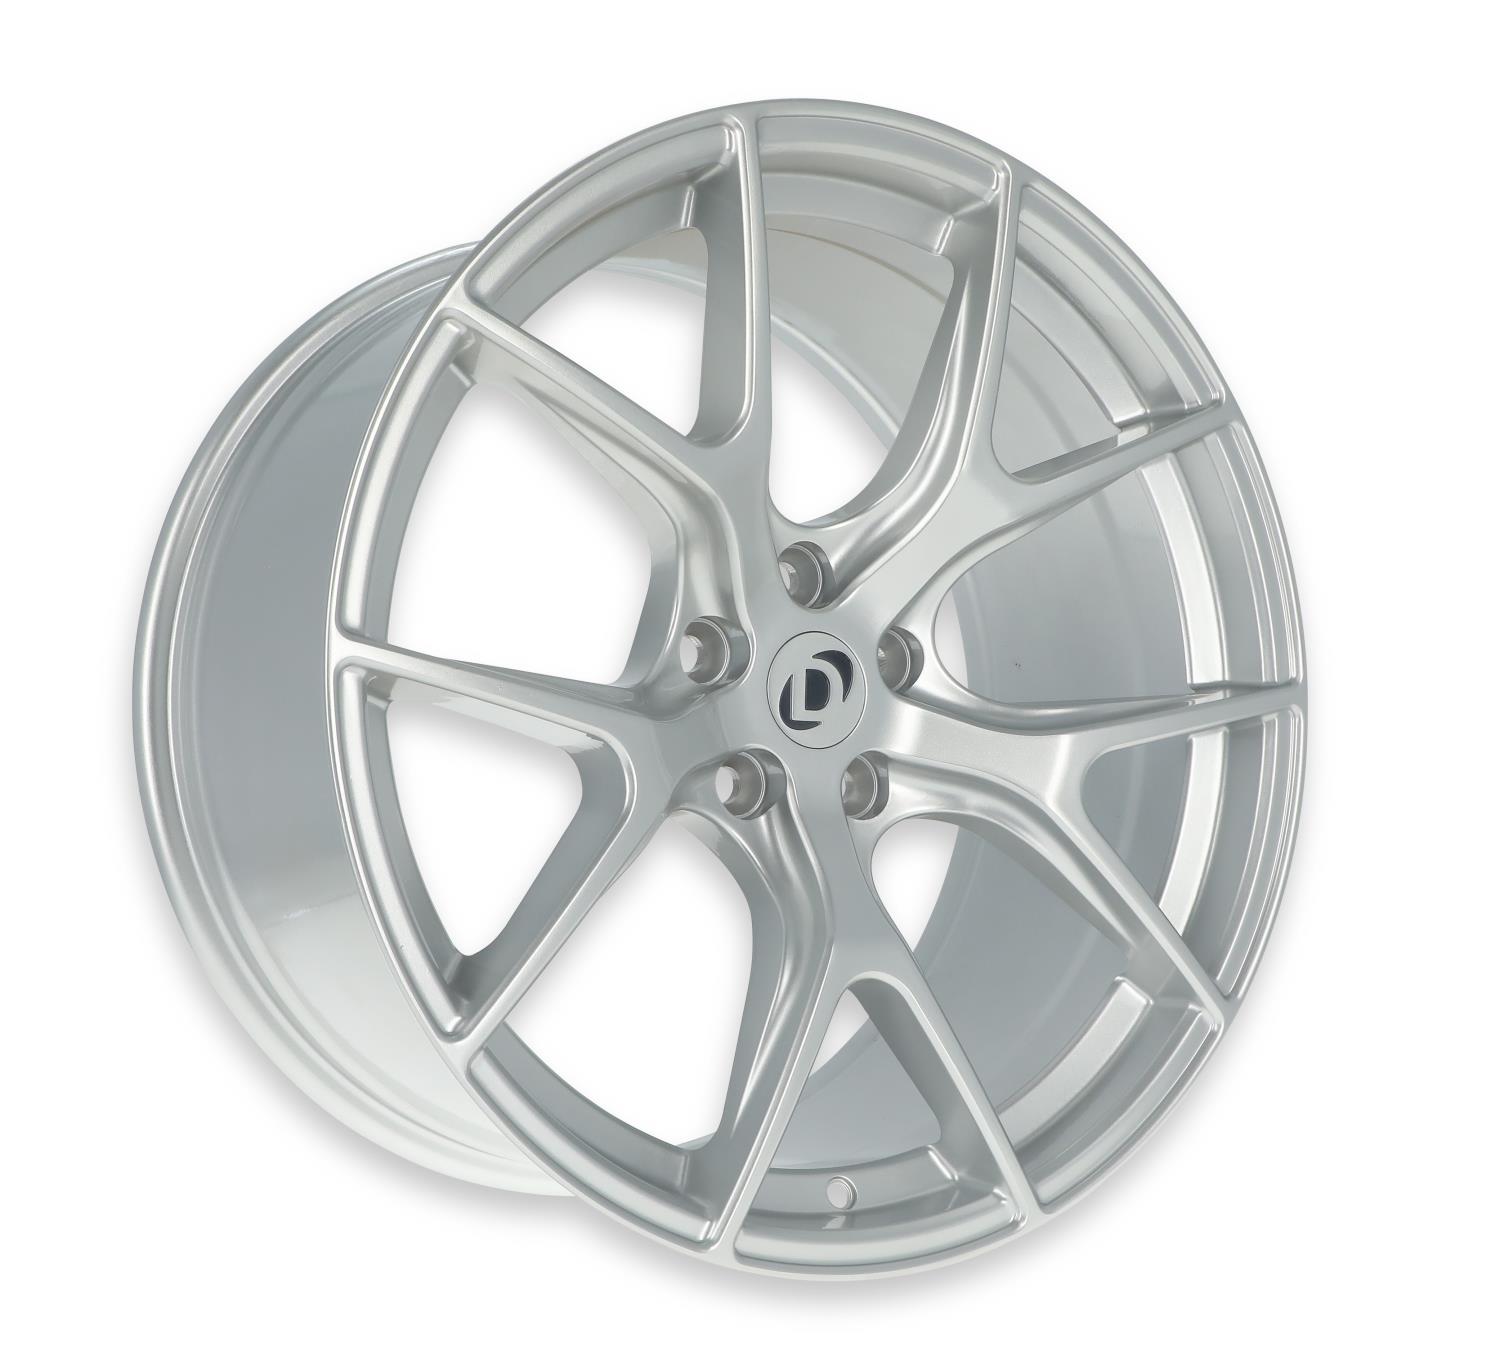 Hyper Kinetic Rear Wheel, Size: 21x8.5", Bolt Pattern: 5x120mm, Backspace: 5.54" [Silver Finish with Clearcoat]